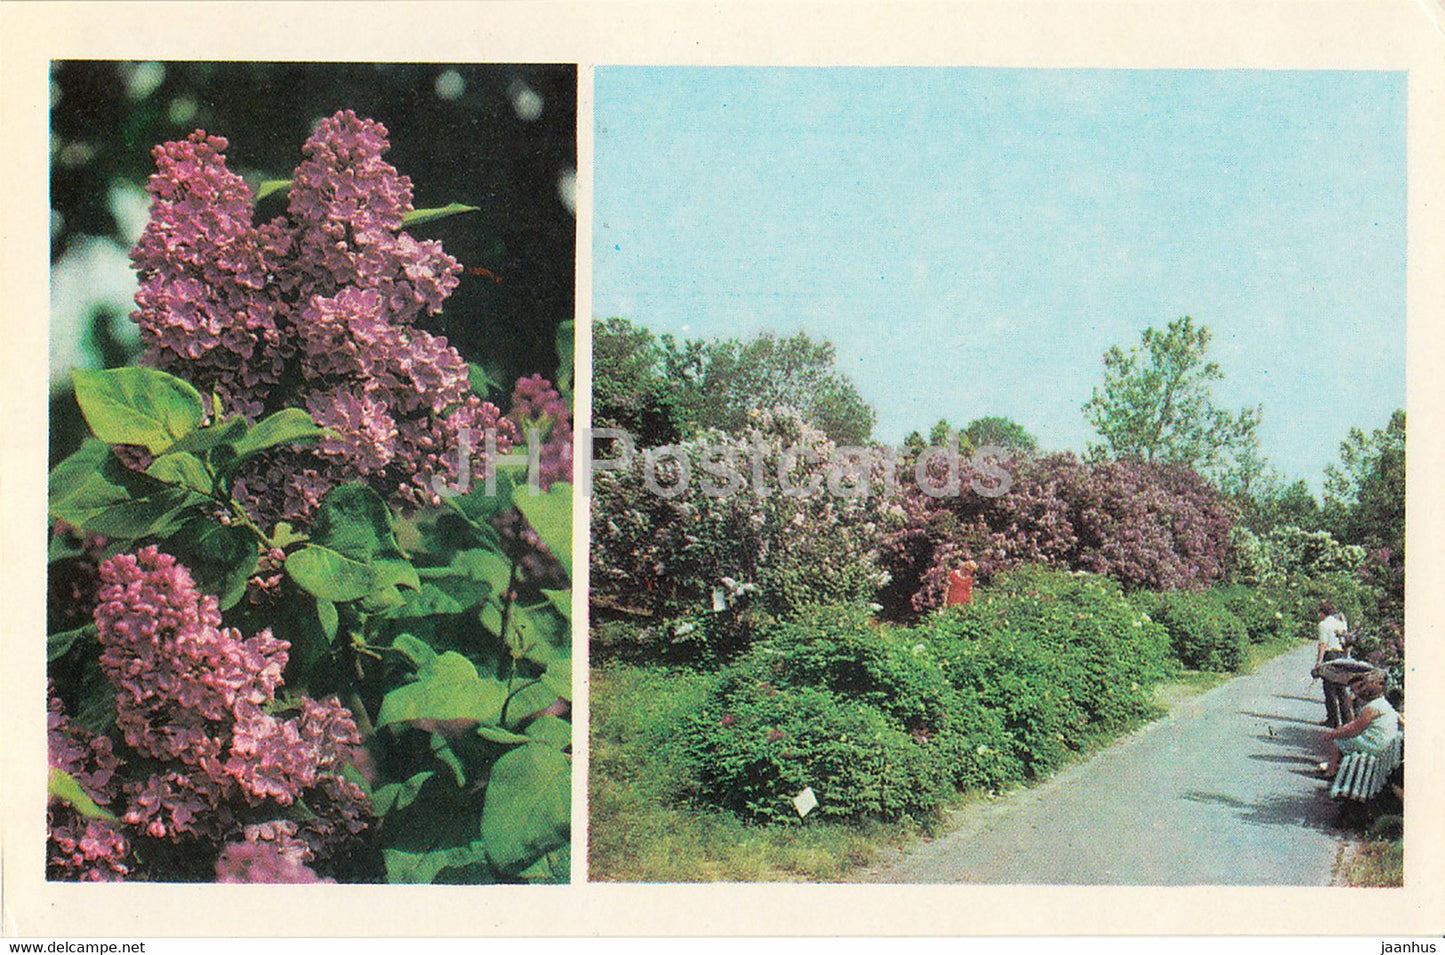 Central State Botanical Garden of Ukraine SSR - Lilac - flowers - 1978 - Ukraine USSR - unused - JH Postcards